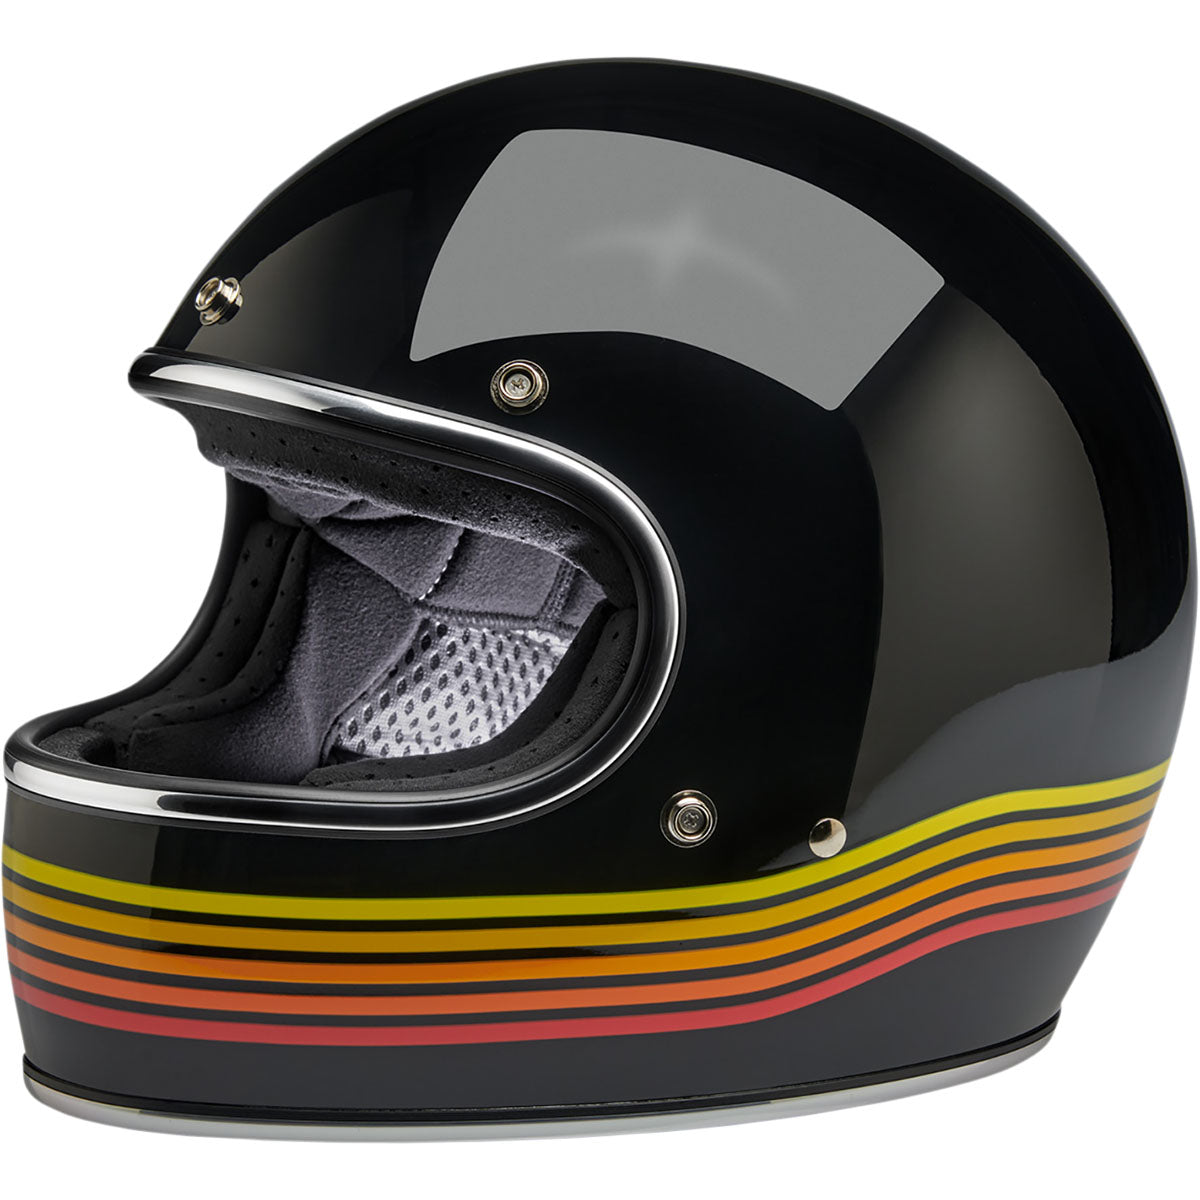 Biltwell Gringo Helmet CLOSEOUT - Gloss Black Spectrum